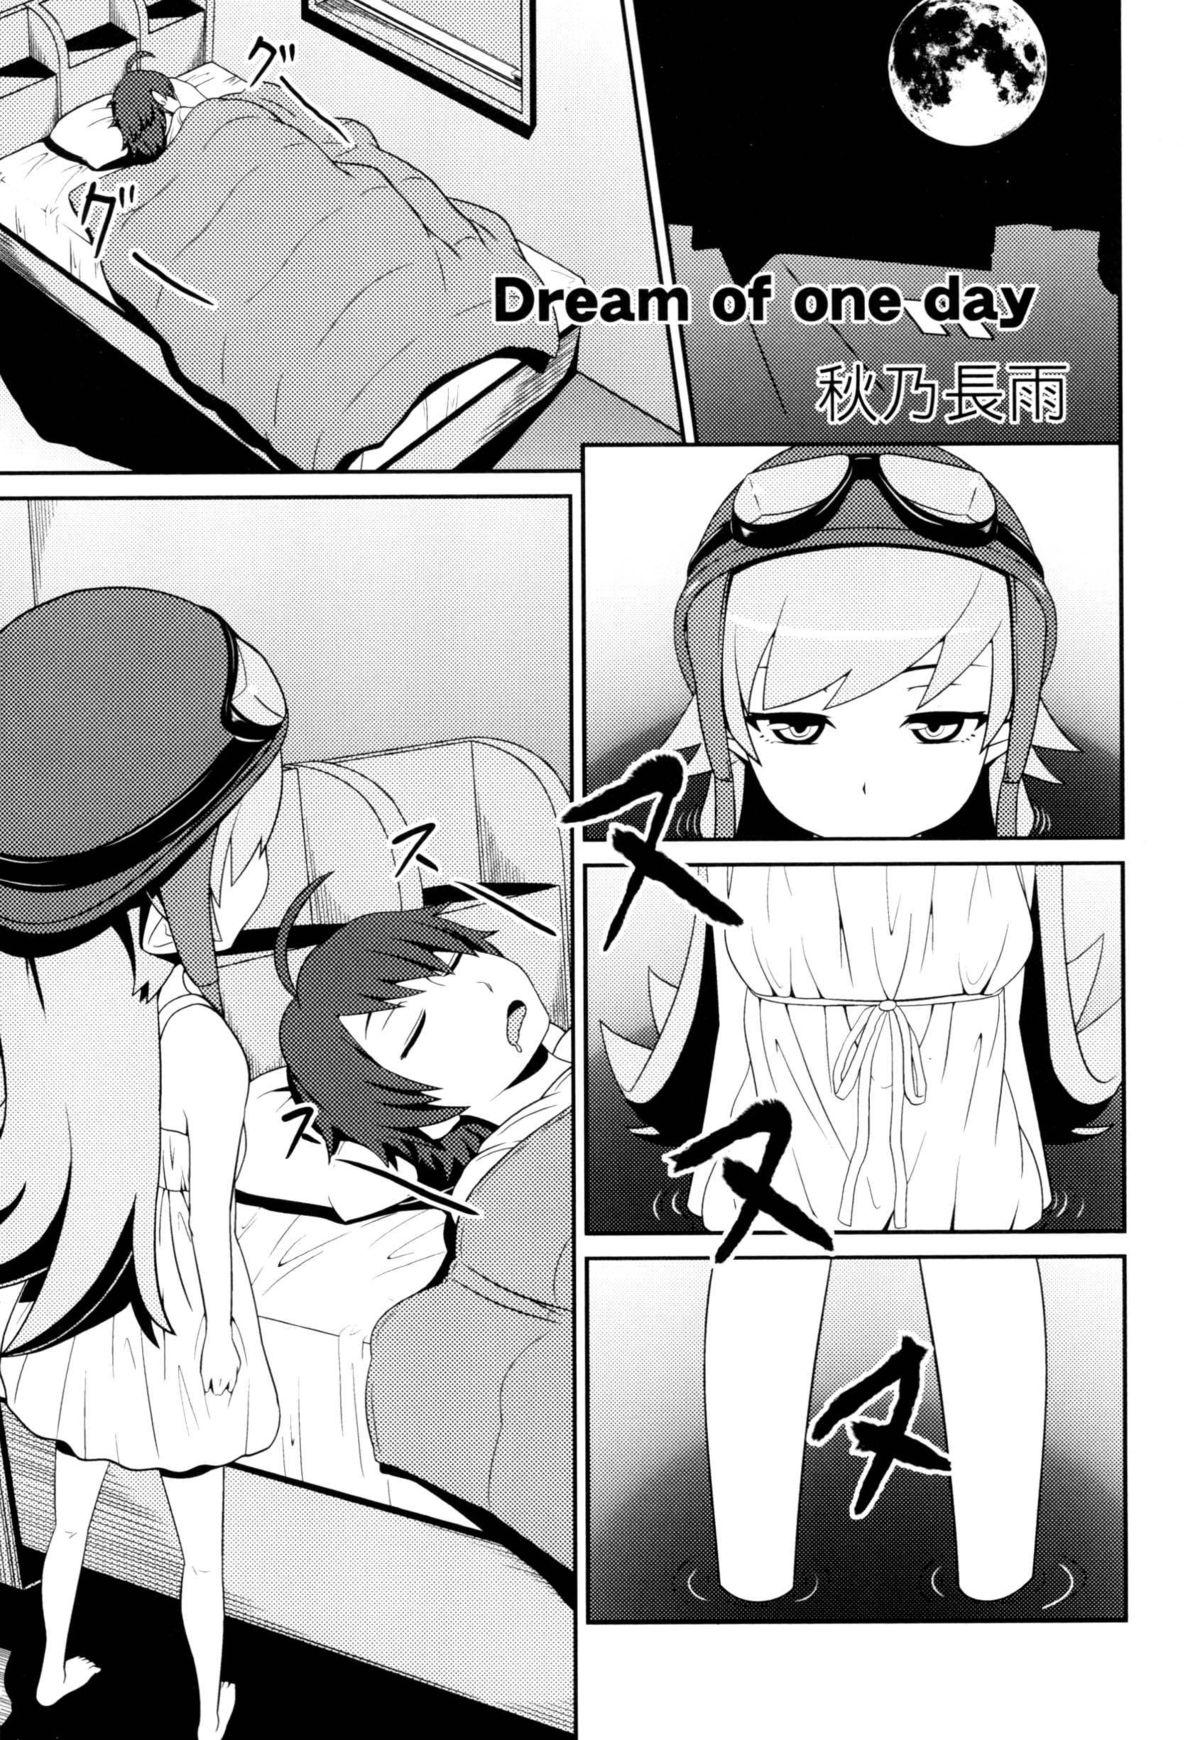 Girlfriend Dream of one day - Bakemonogatari Style - Page 3